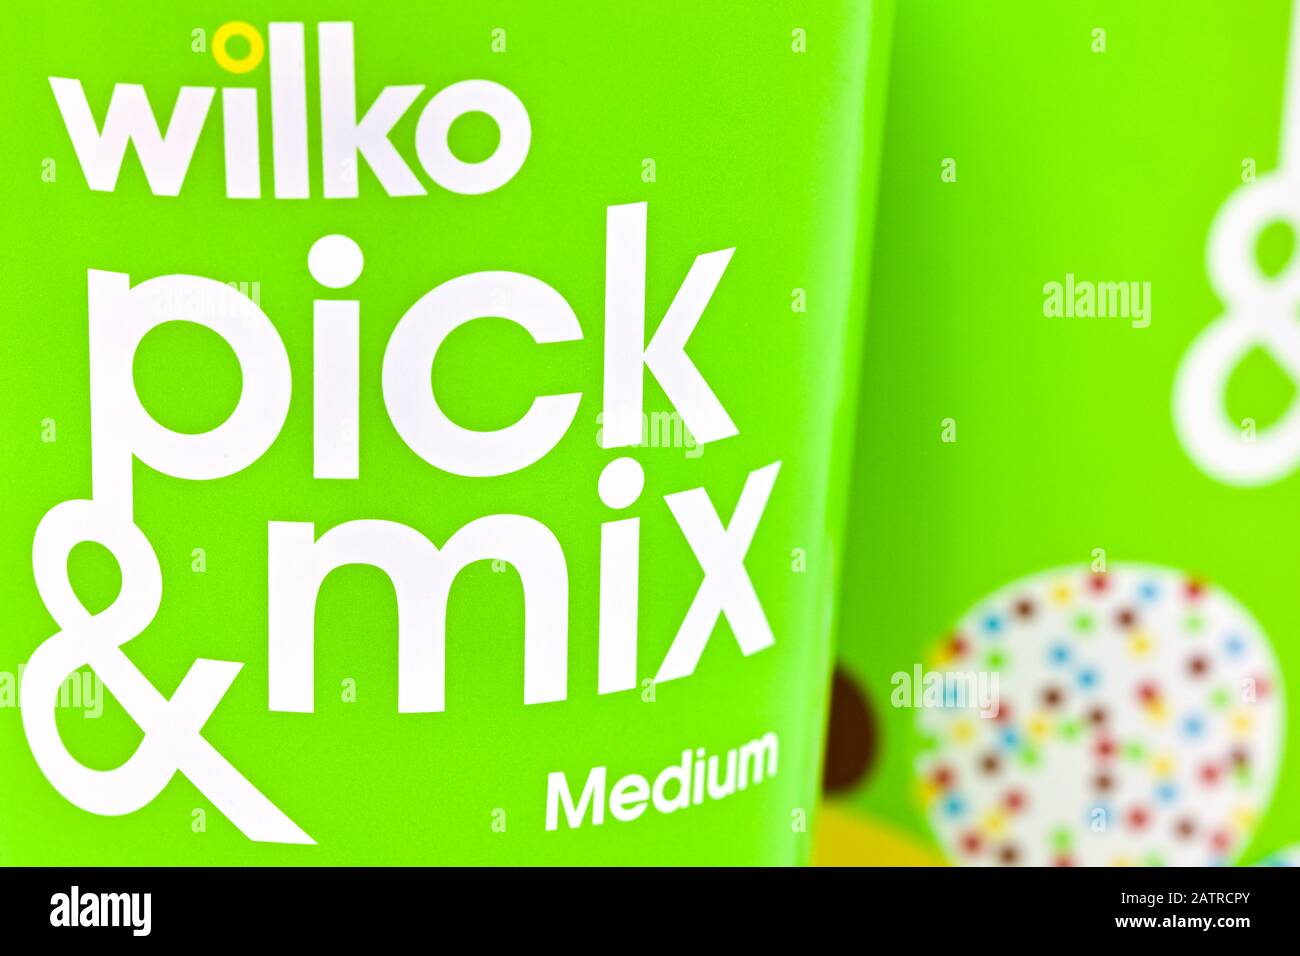 Wilko Pick &Mix Stockfoto